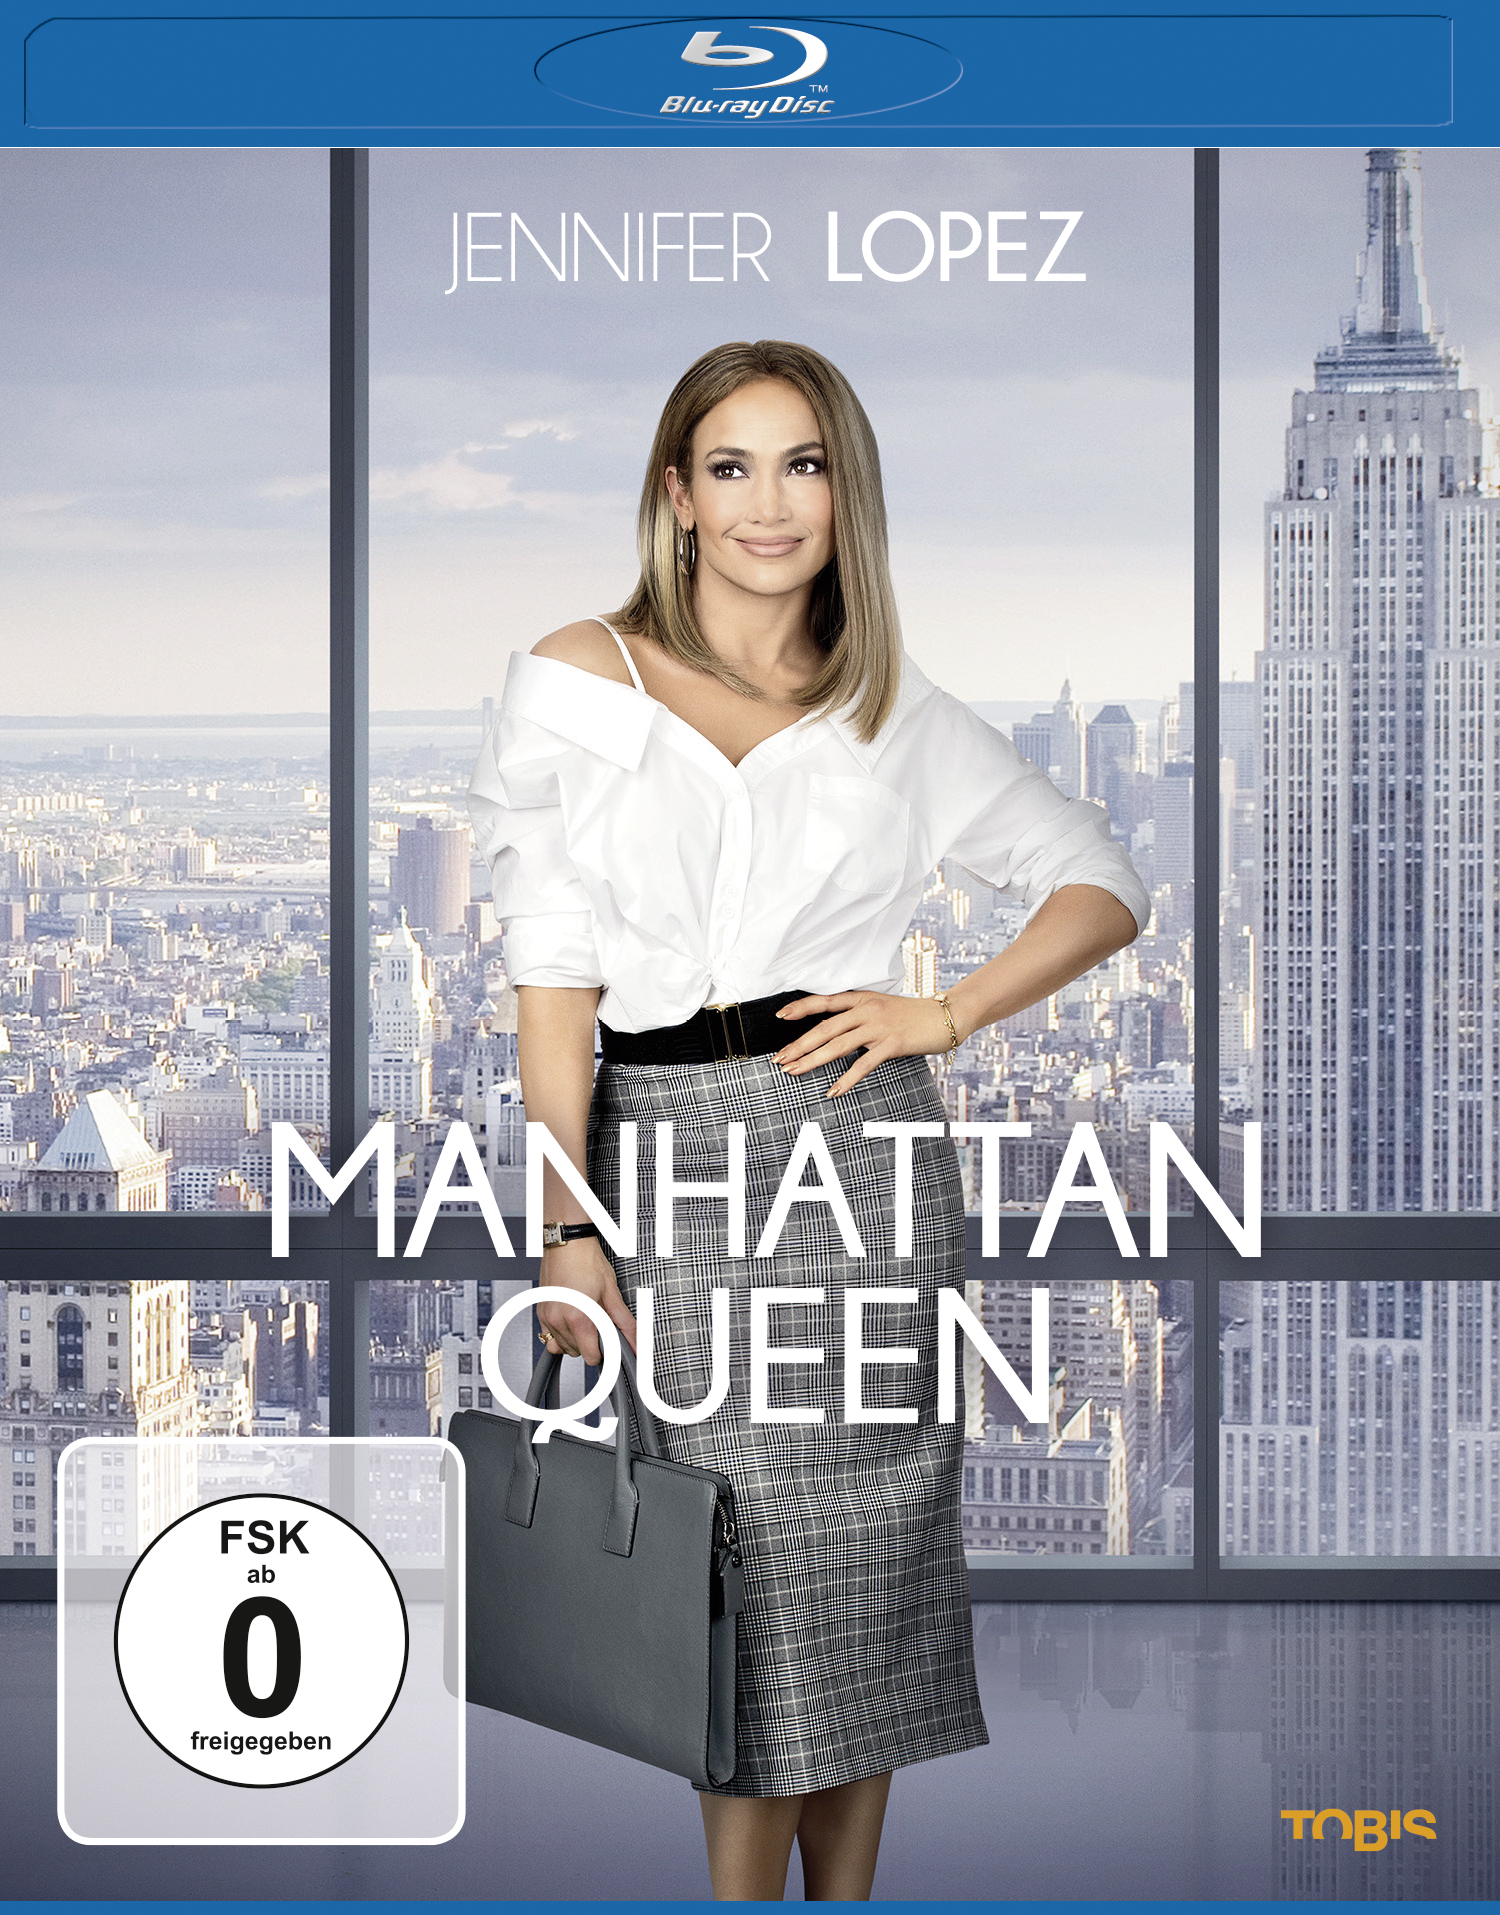 Blu-ray Queen Manhatten